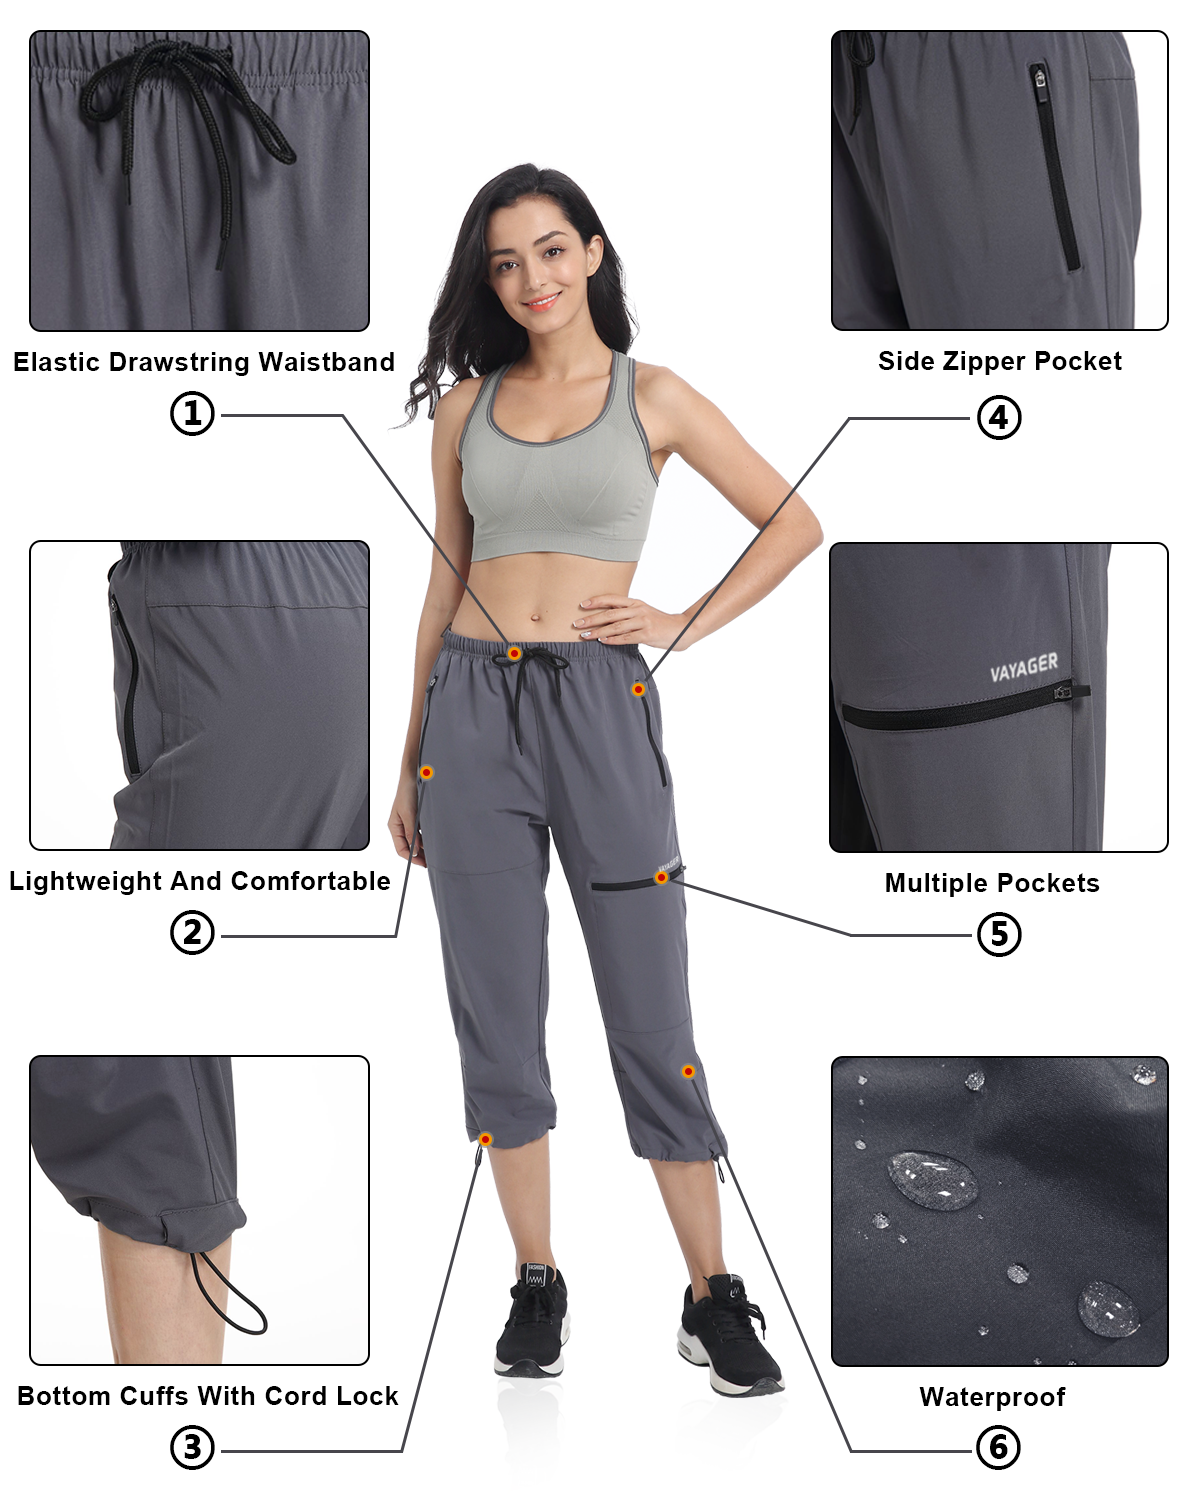 Capri Pants for Women Workout Cargo Pants 3/4 Length Summer Casual Lounge  Capris Slacks with Multi Pockets 